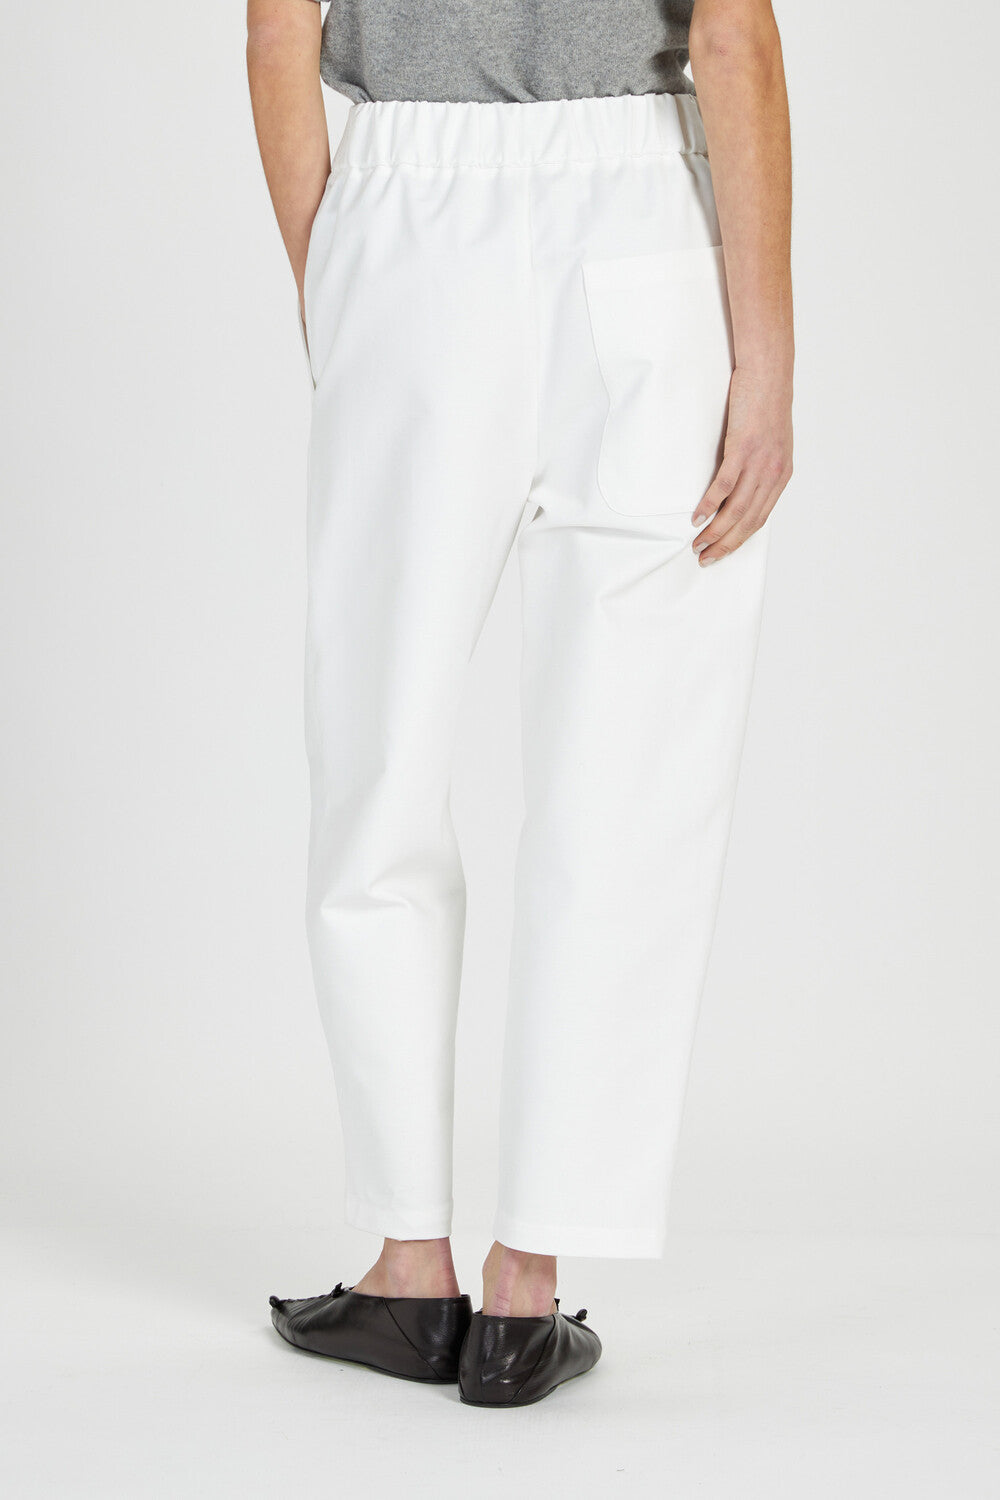 Trousers Joie Minimal / White